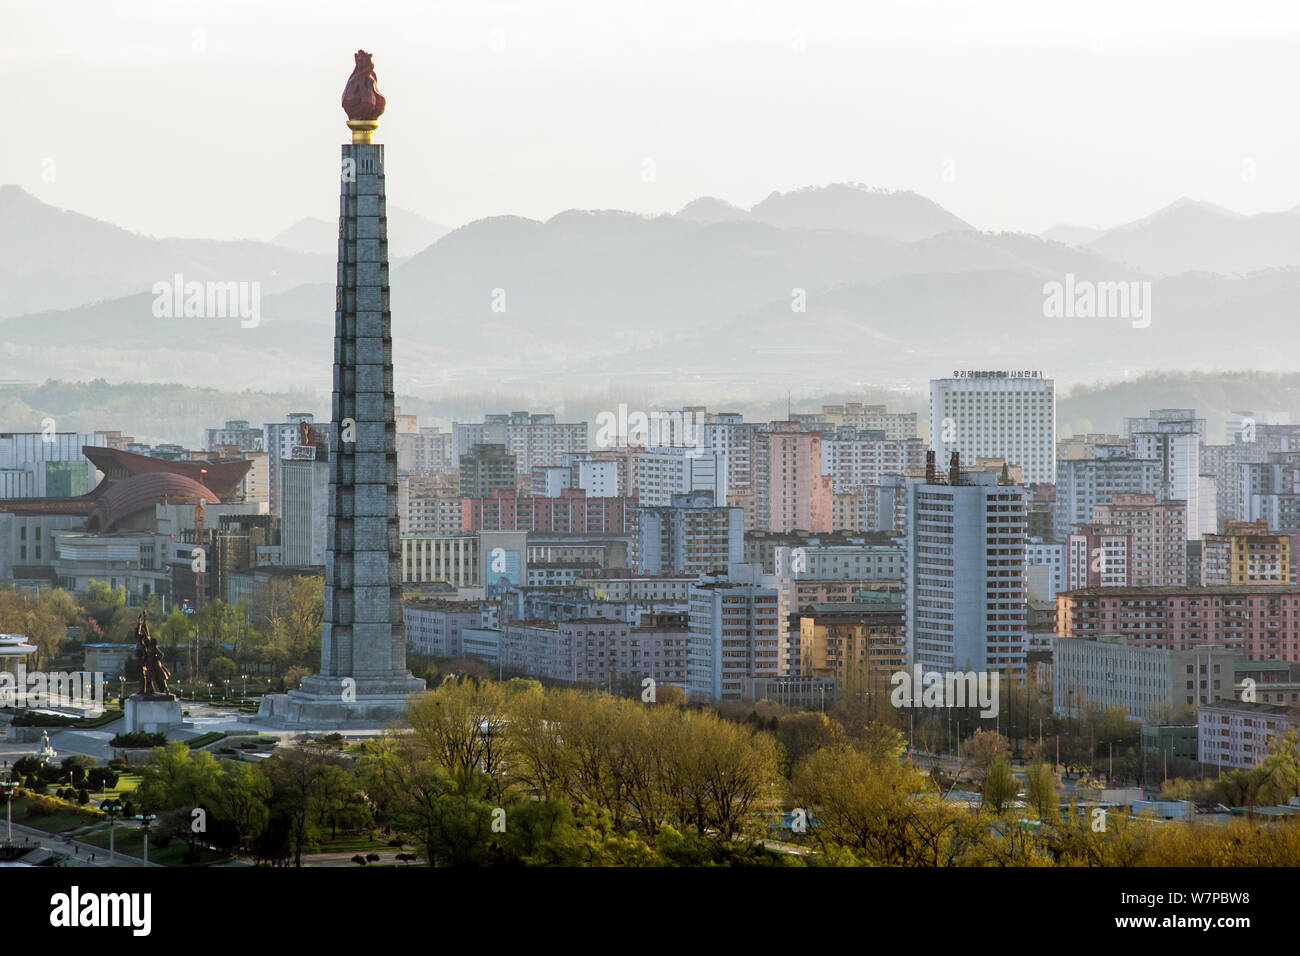 Pyongyang city skyline and the Juche Tower, Democratic Peoples' Republic of Korea (DPRK), North Korea, 2012 Stock Photo